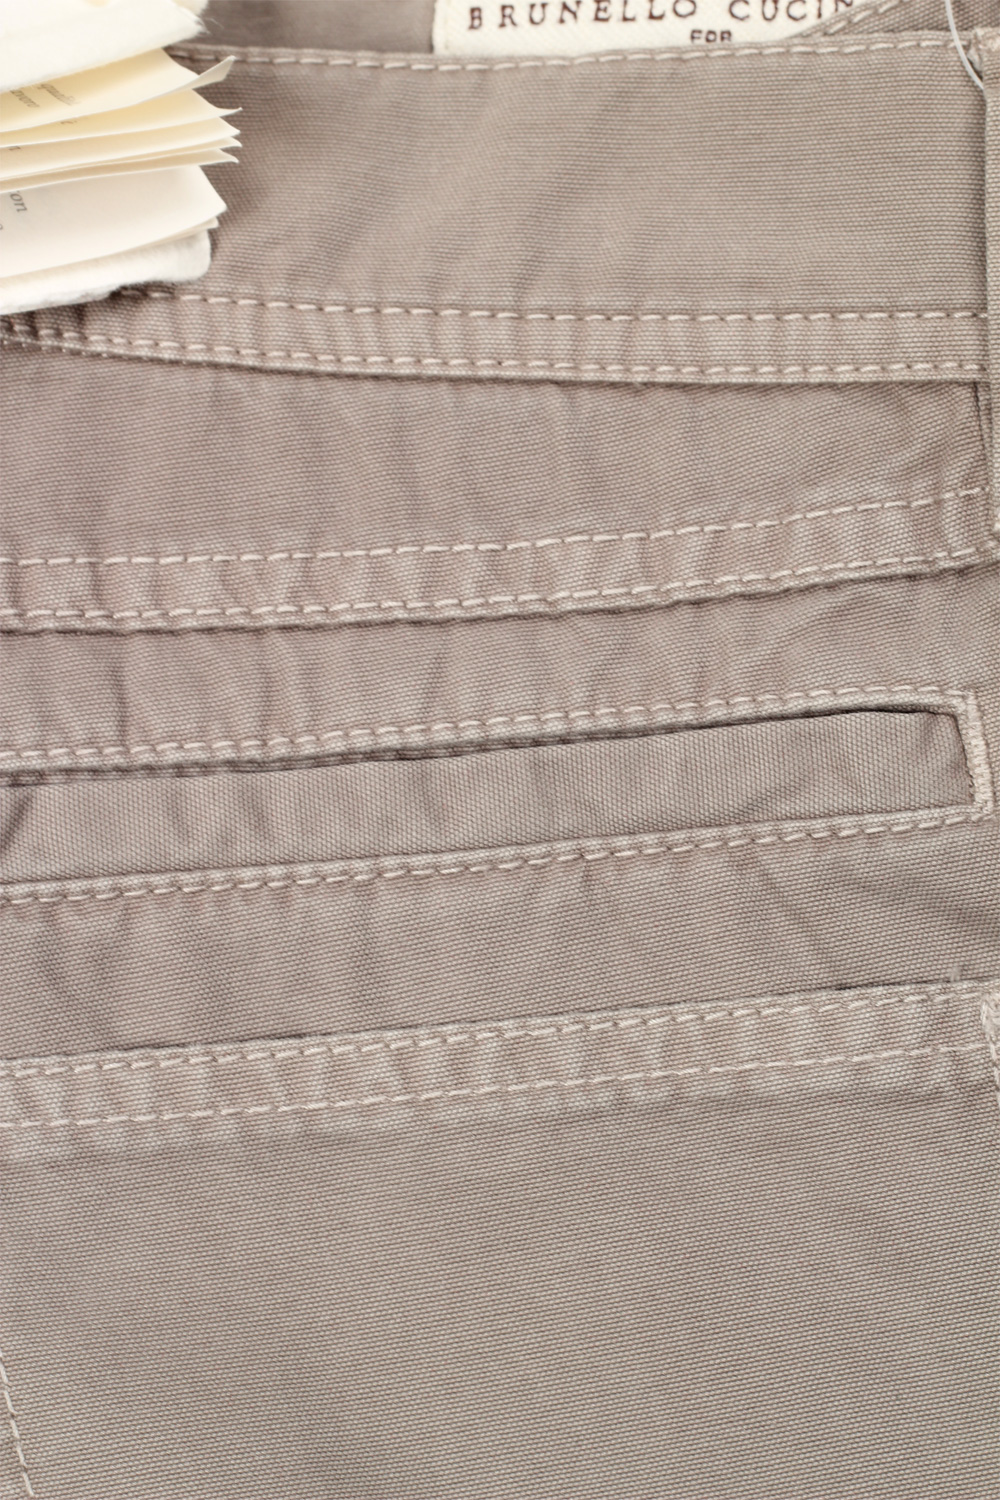 Brunello Cucinelli Beige Trousers Size 46 / 30 U.S. | Costume Limité